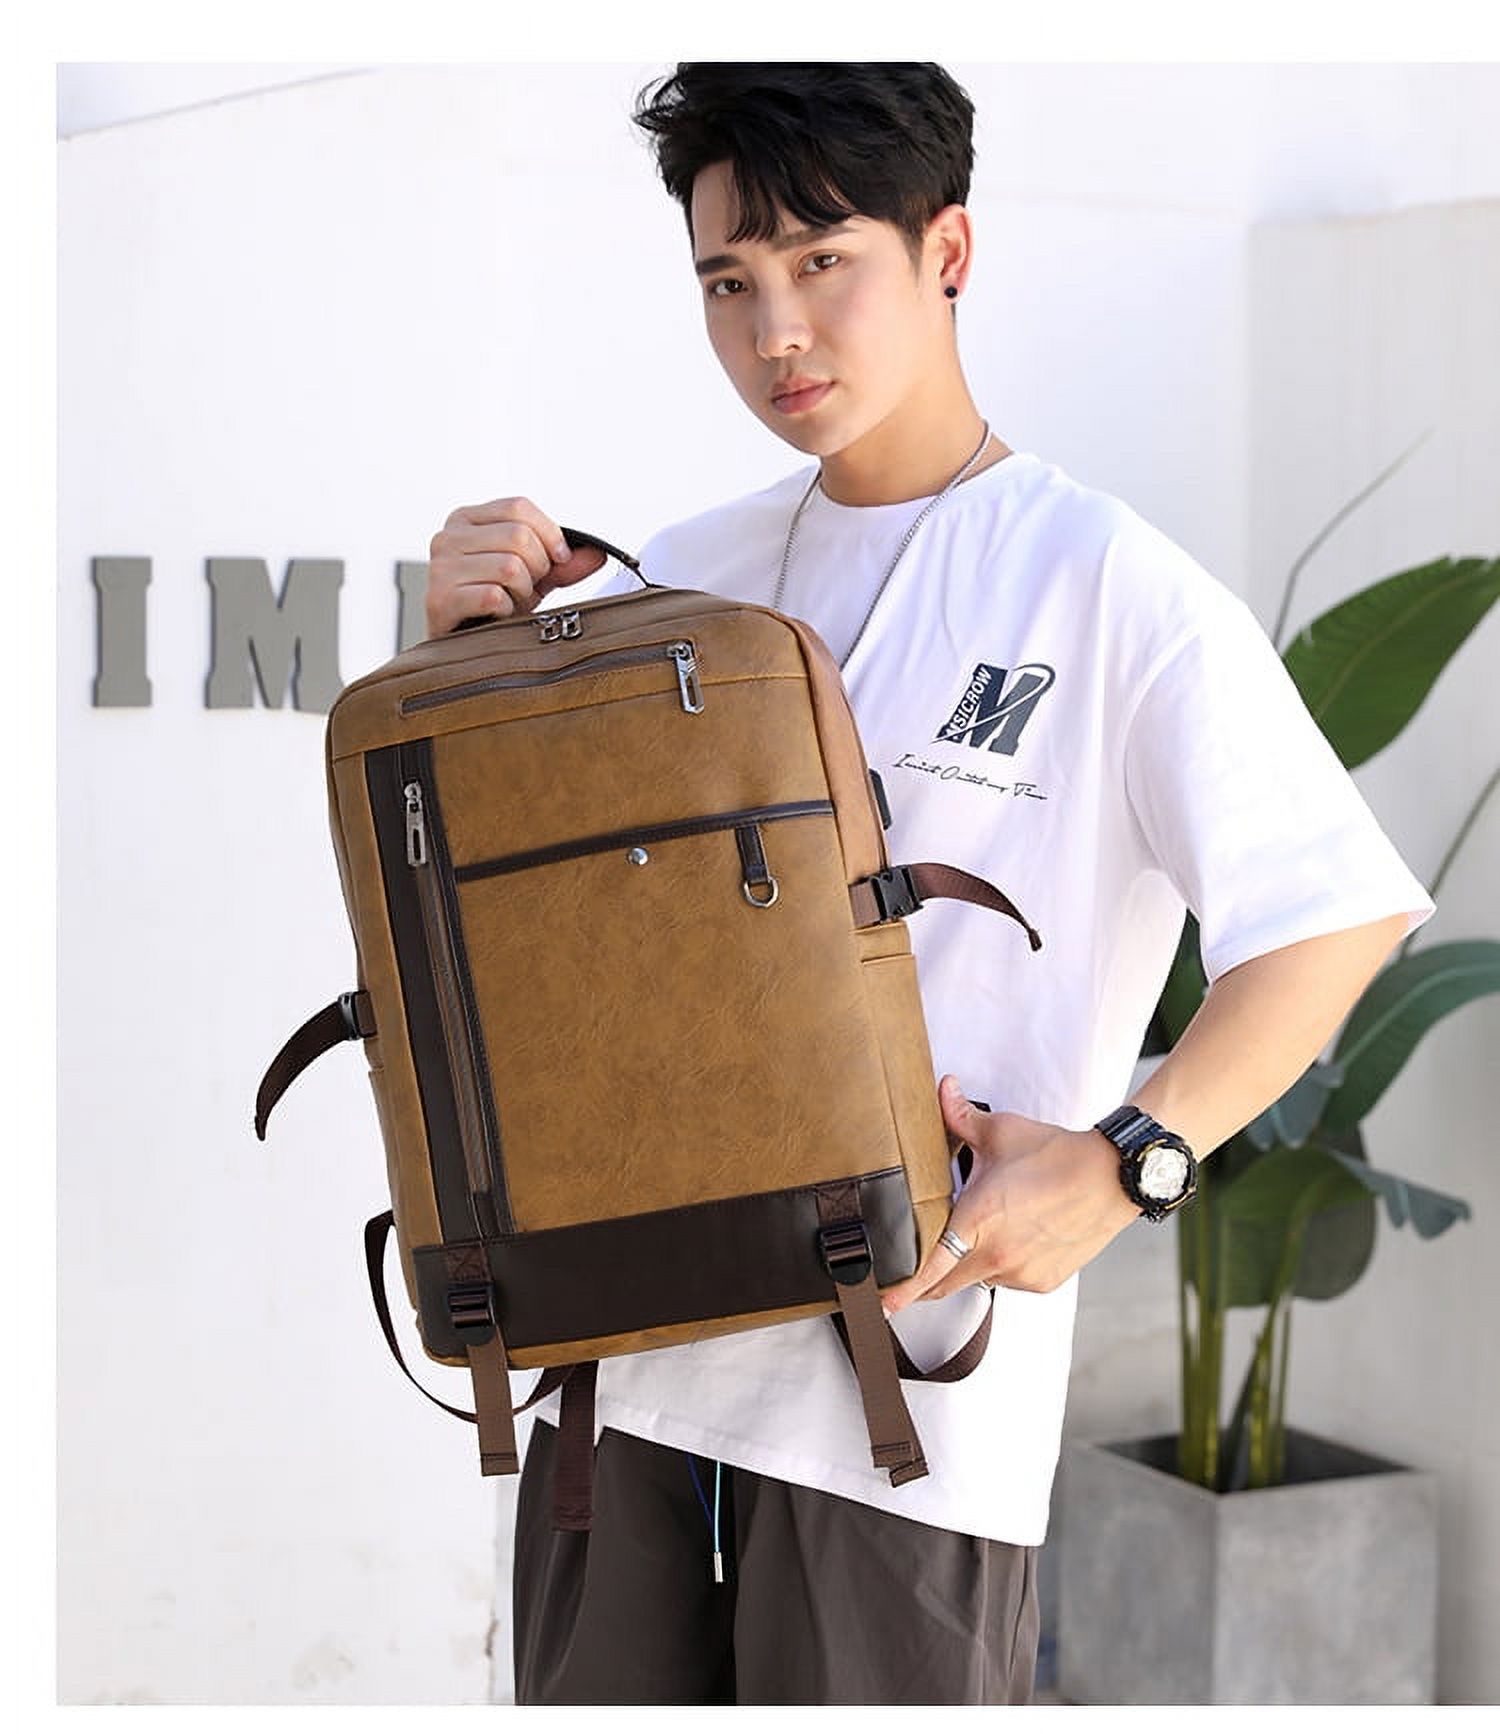 Toyella Summer New Trend Backpack Men's Business Travel Backpack Fashion Computer Bag Khaki - image 5 of 5